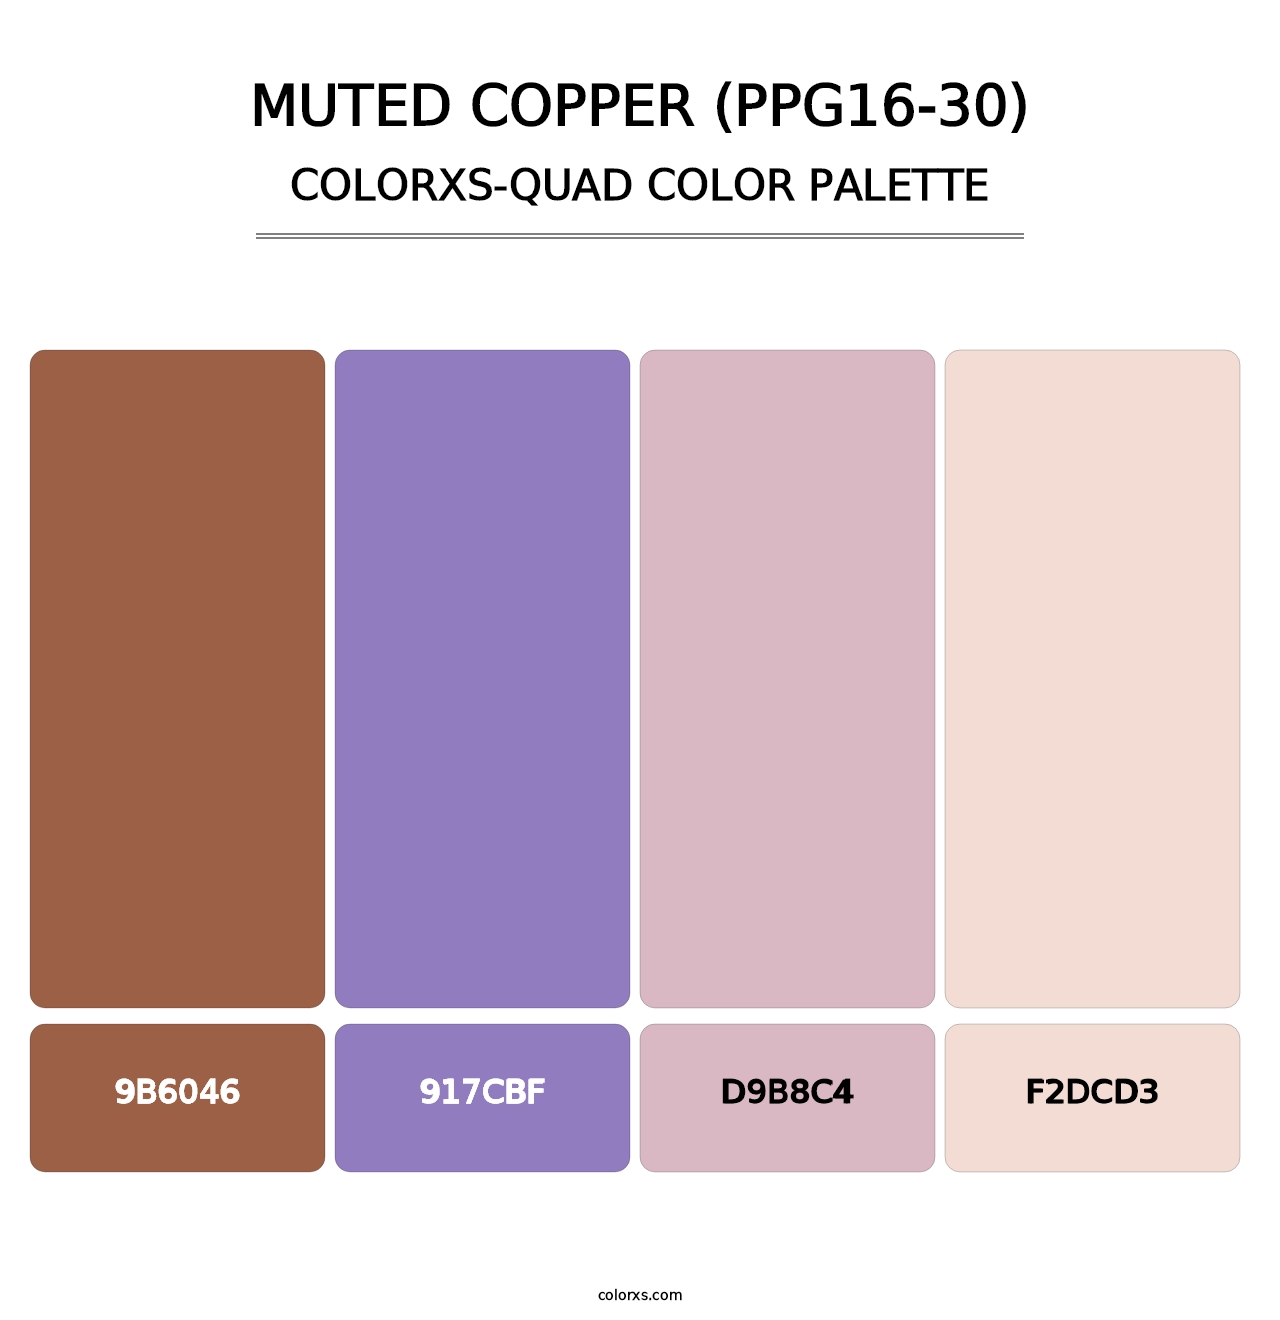 Muted Copper (PPG16-30) - Colorxs Quad Palette